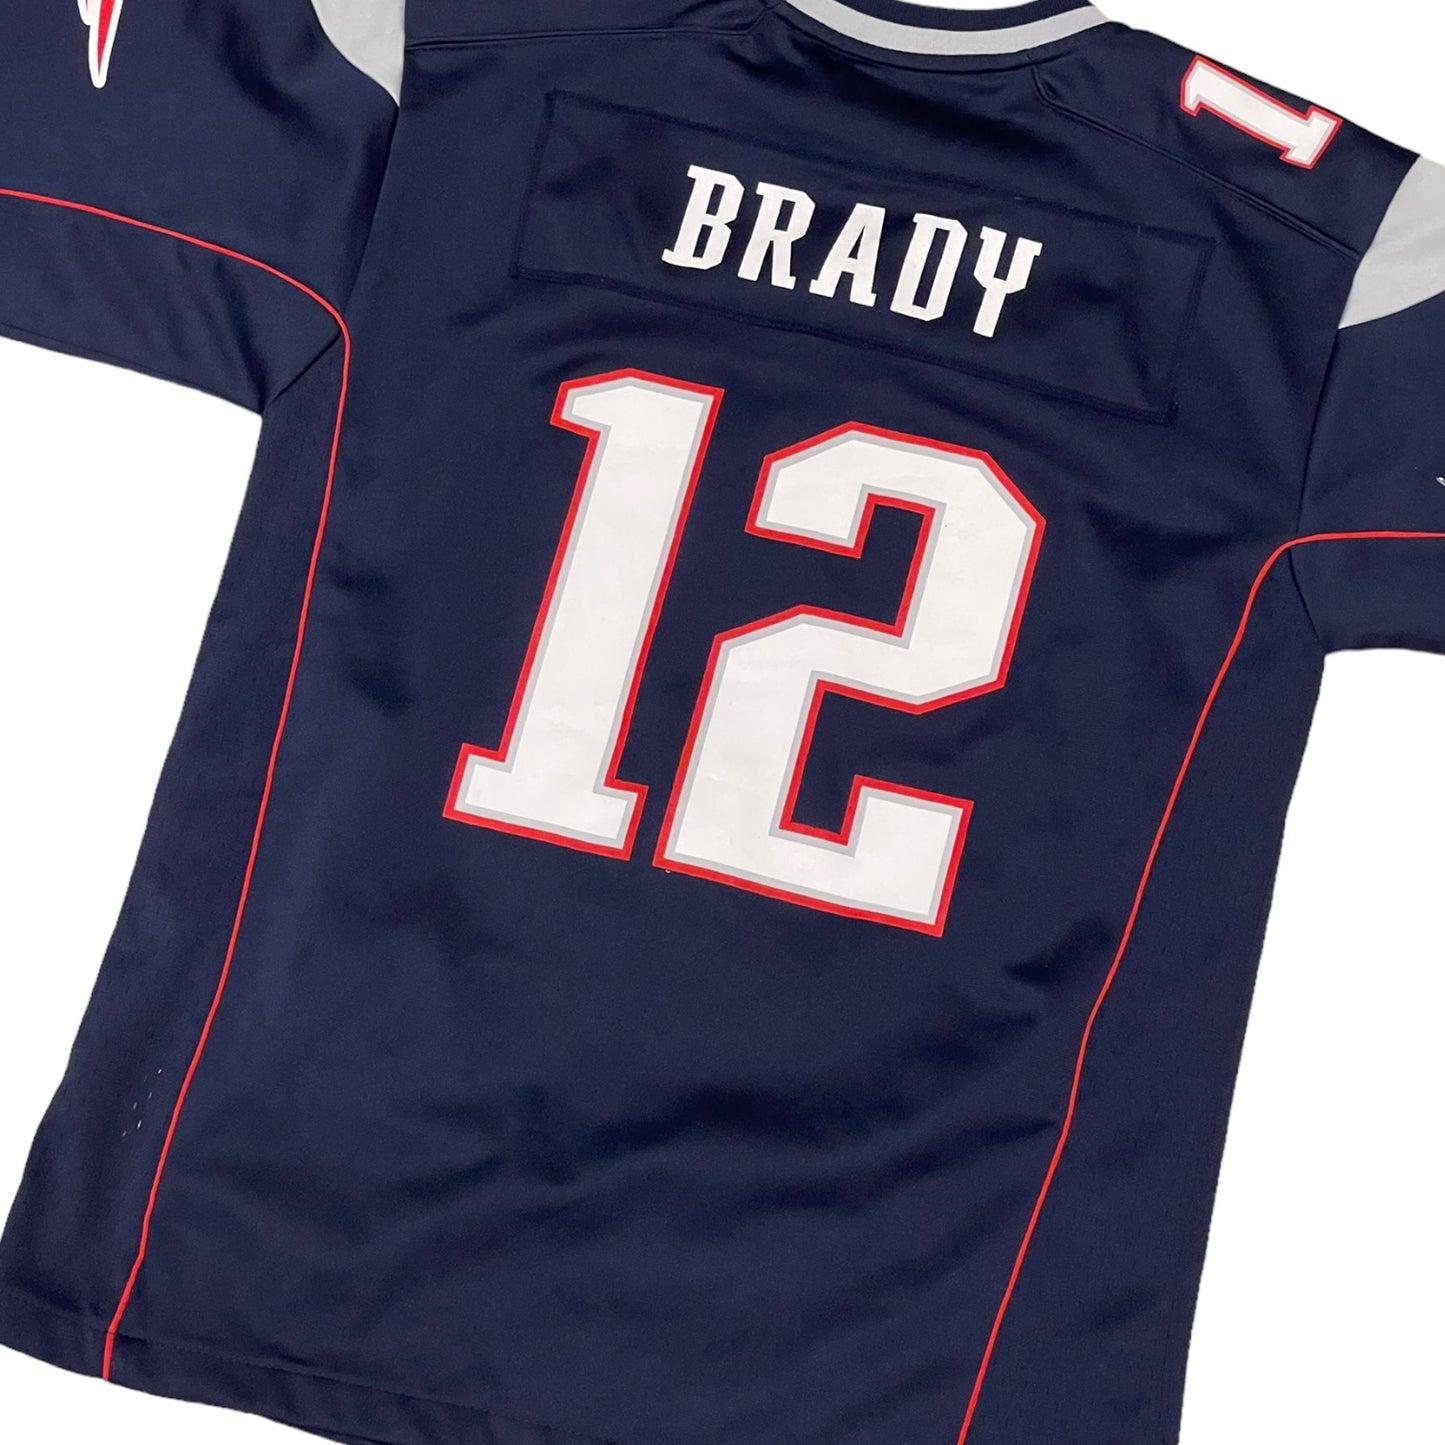 Nike Patriots "Brady" 12 NFL Jersey